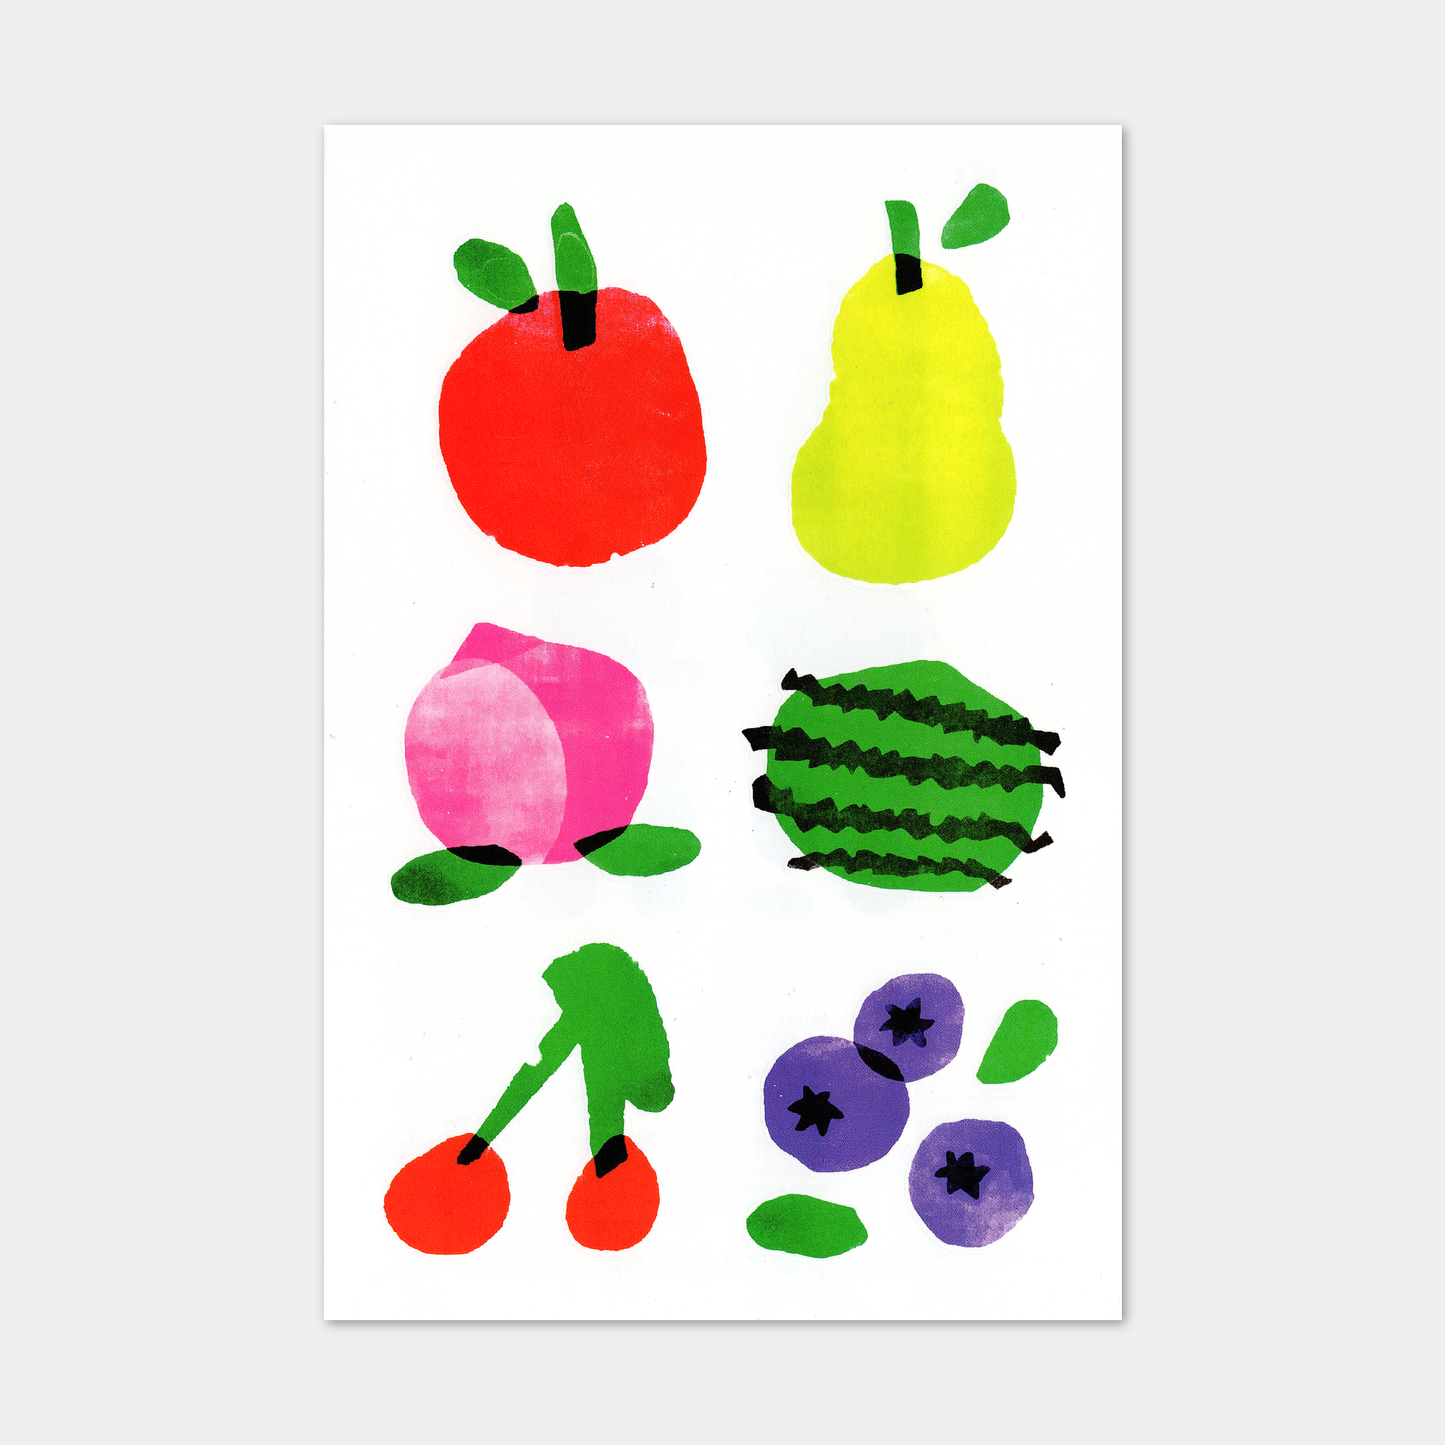 Fruity Fruits